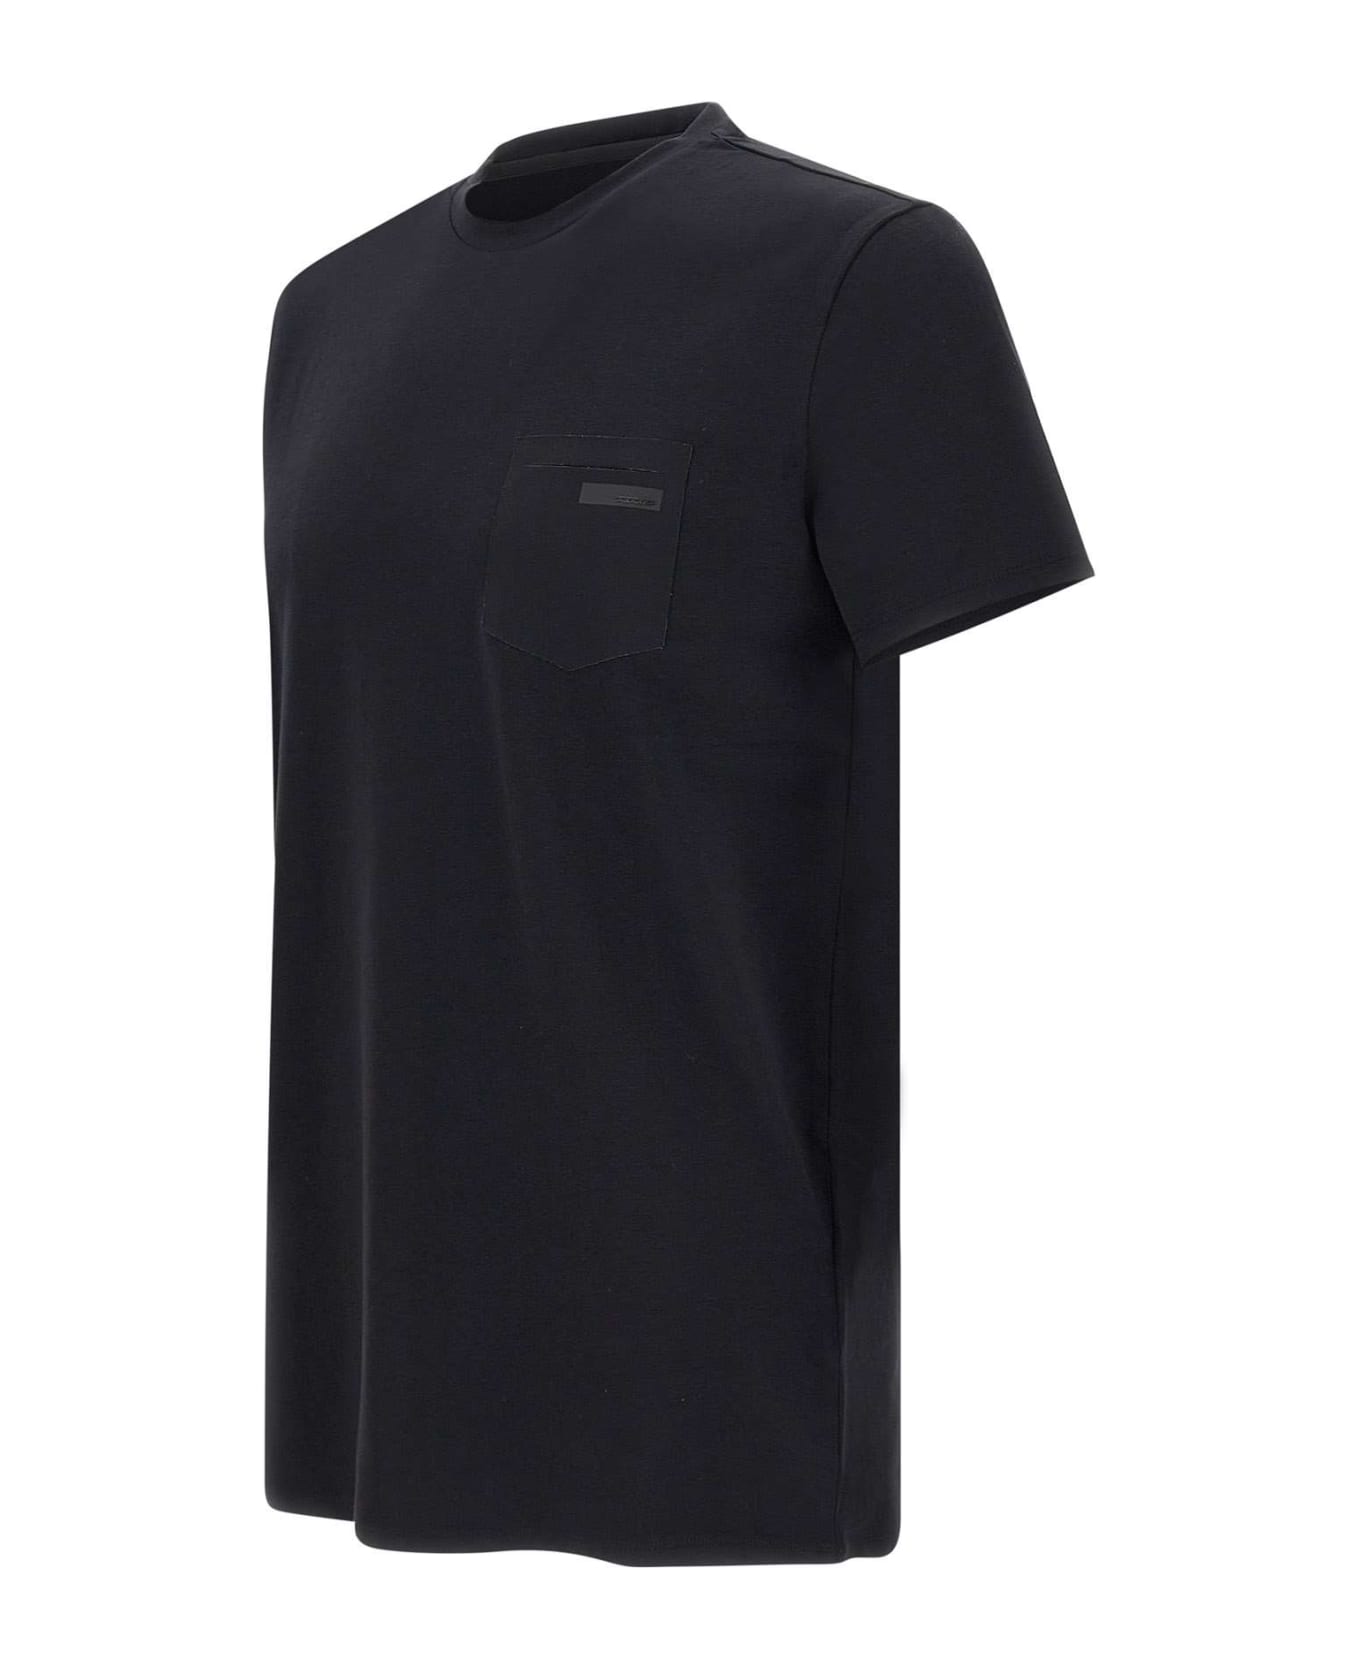 RRD - Roberto Ricci Design 'revo Shirty' T-shirt